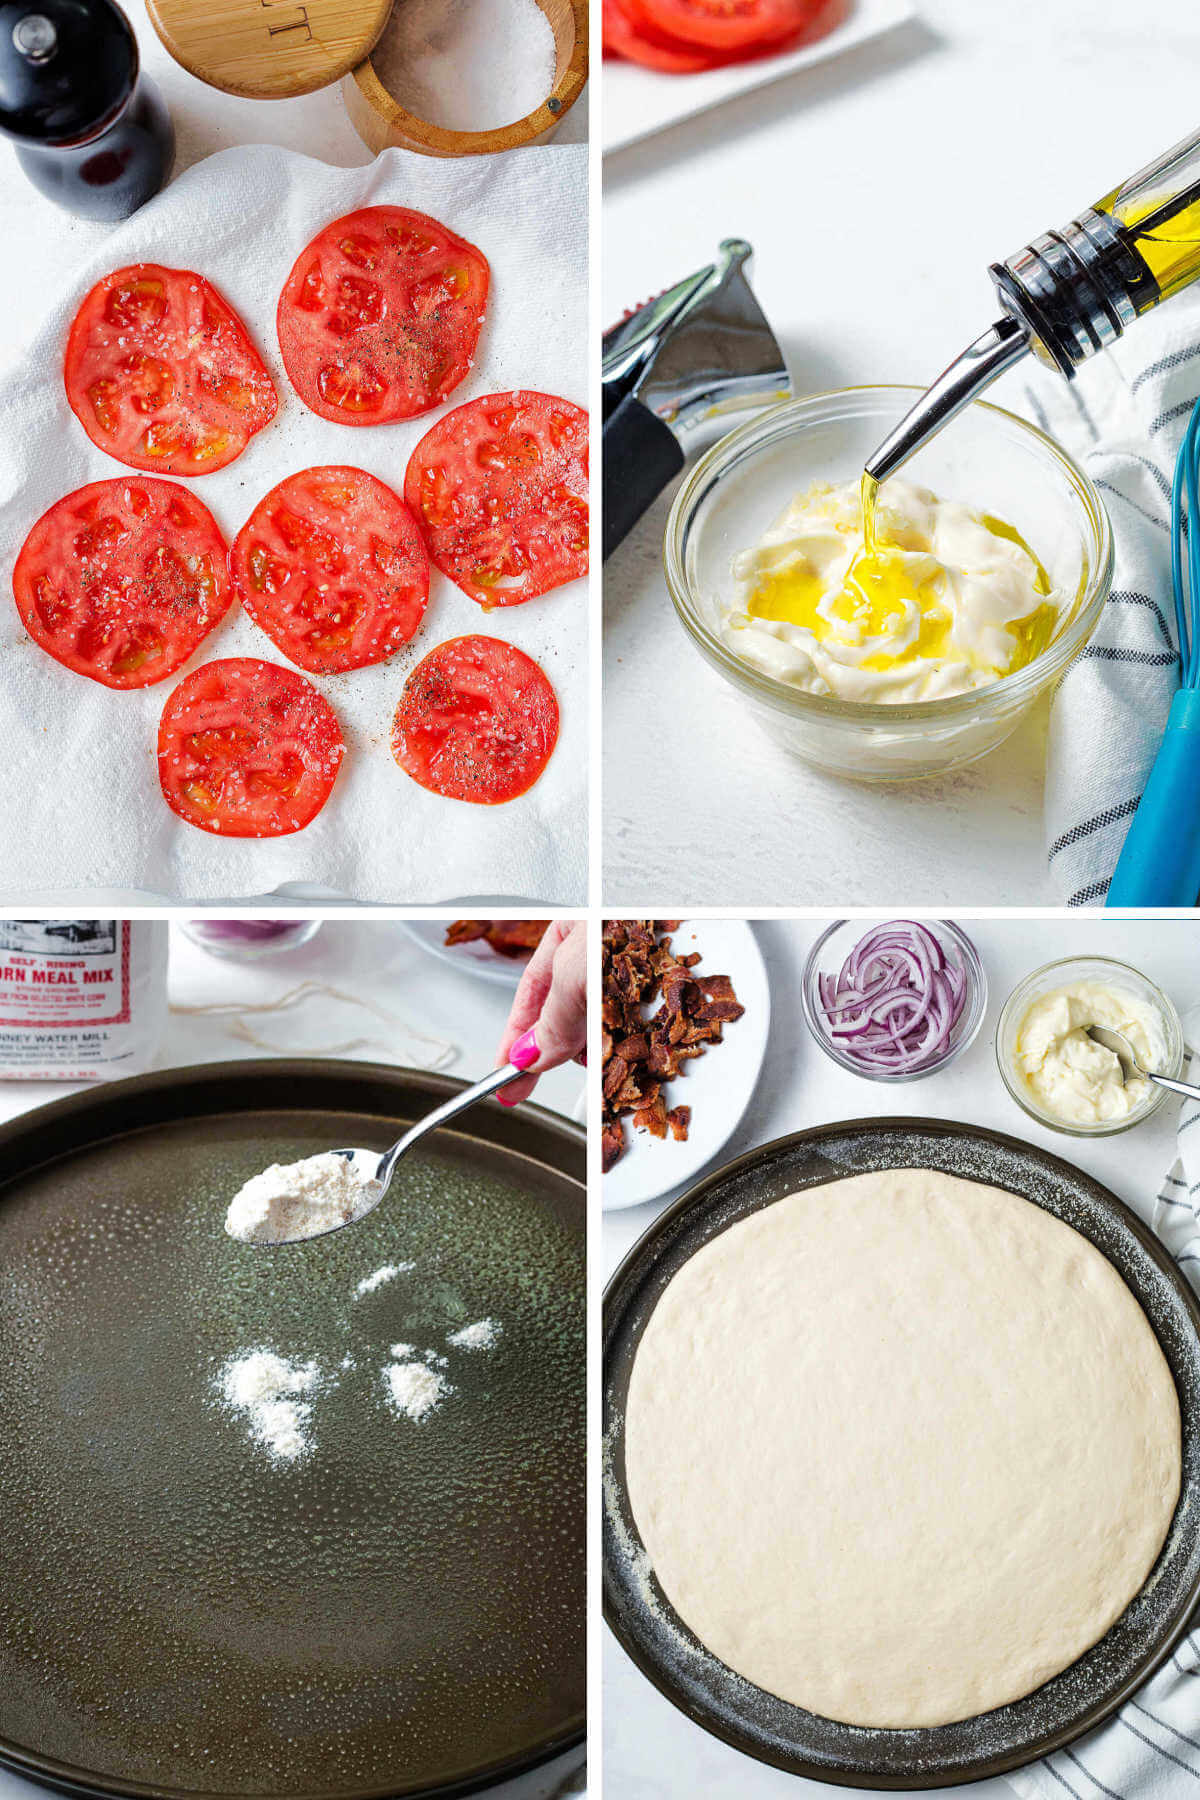 process steps for BLT pizza: salt tomatoes; make garlic aioli; shape pizza dough on pan.